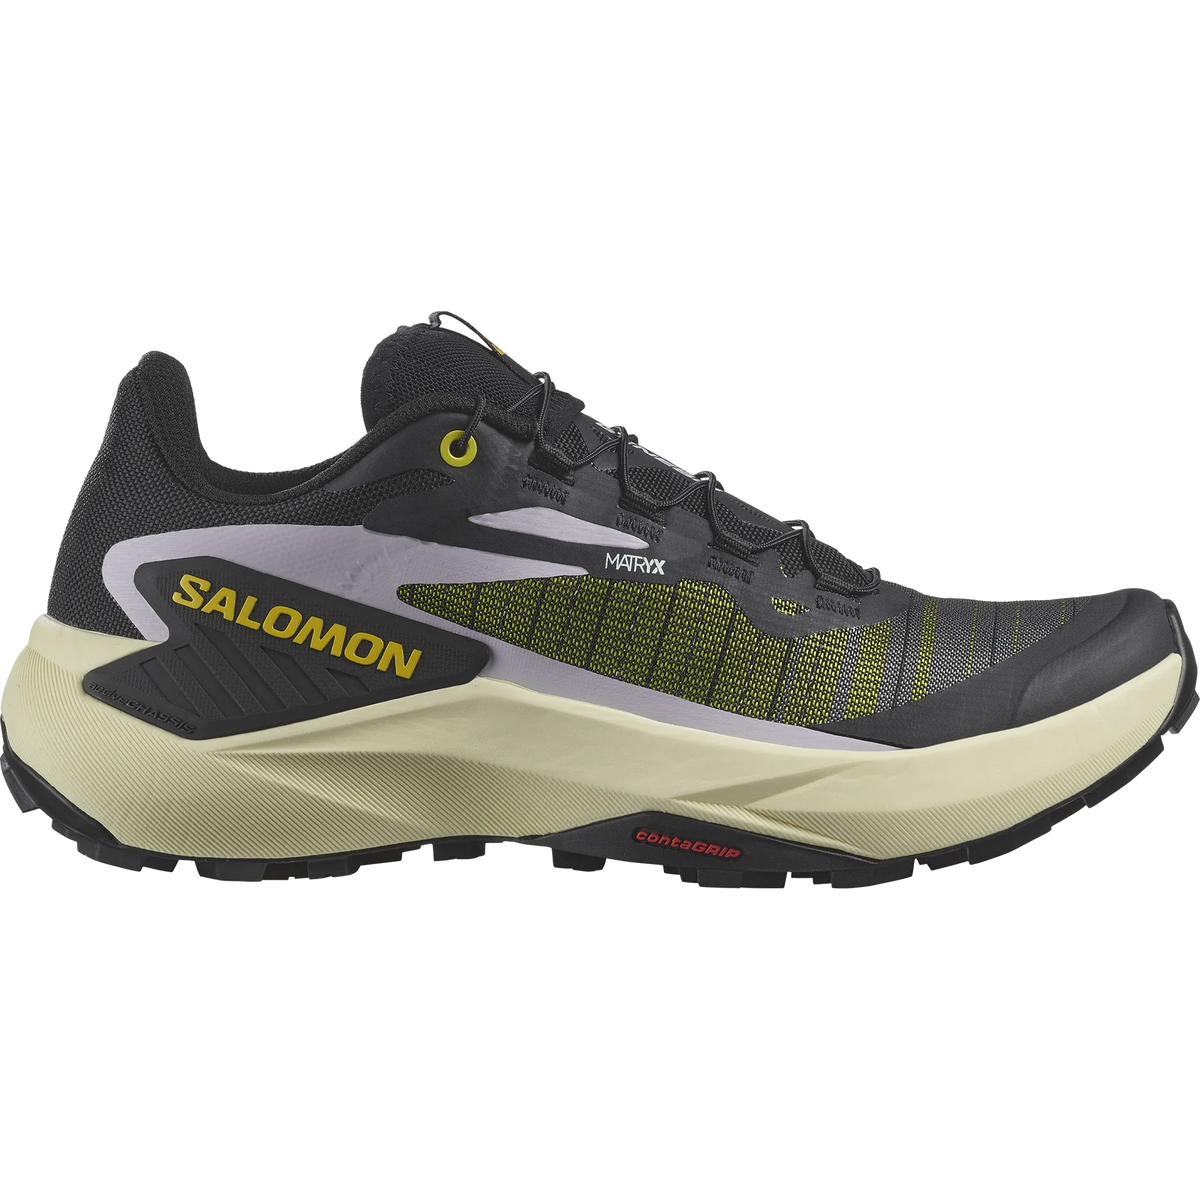 Salomon Genesis Trail Running Shoes (Women's) - Black / Sulphur Spring / Orchid Petal - Find Your Feet Australia Hobart Launceston Tasmania